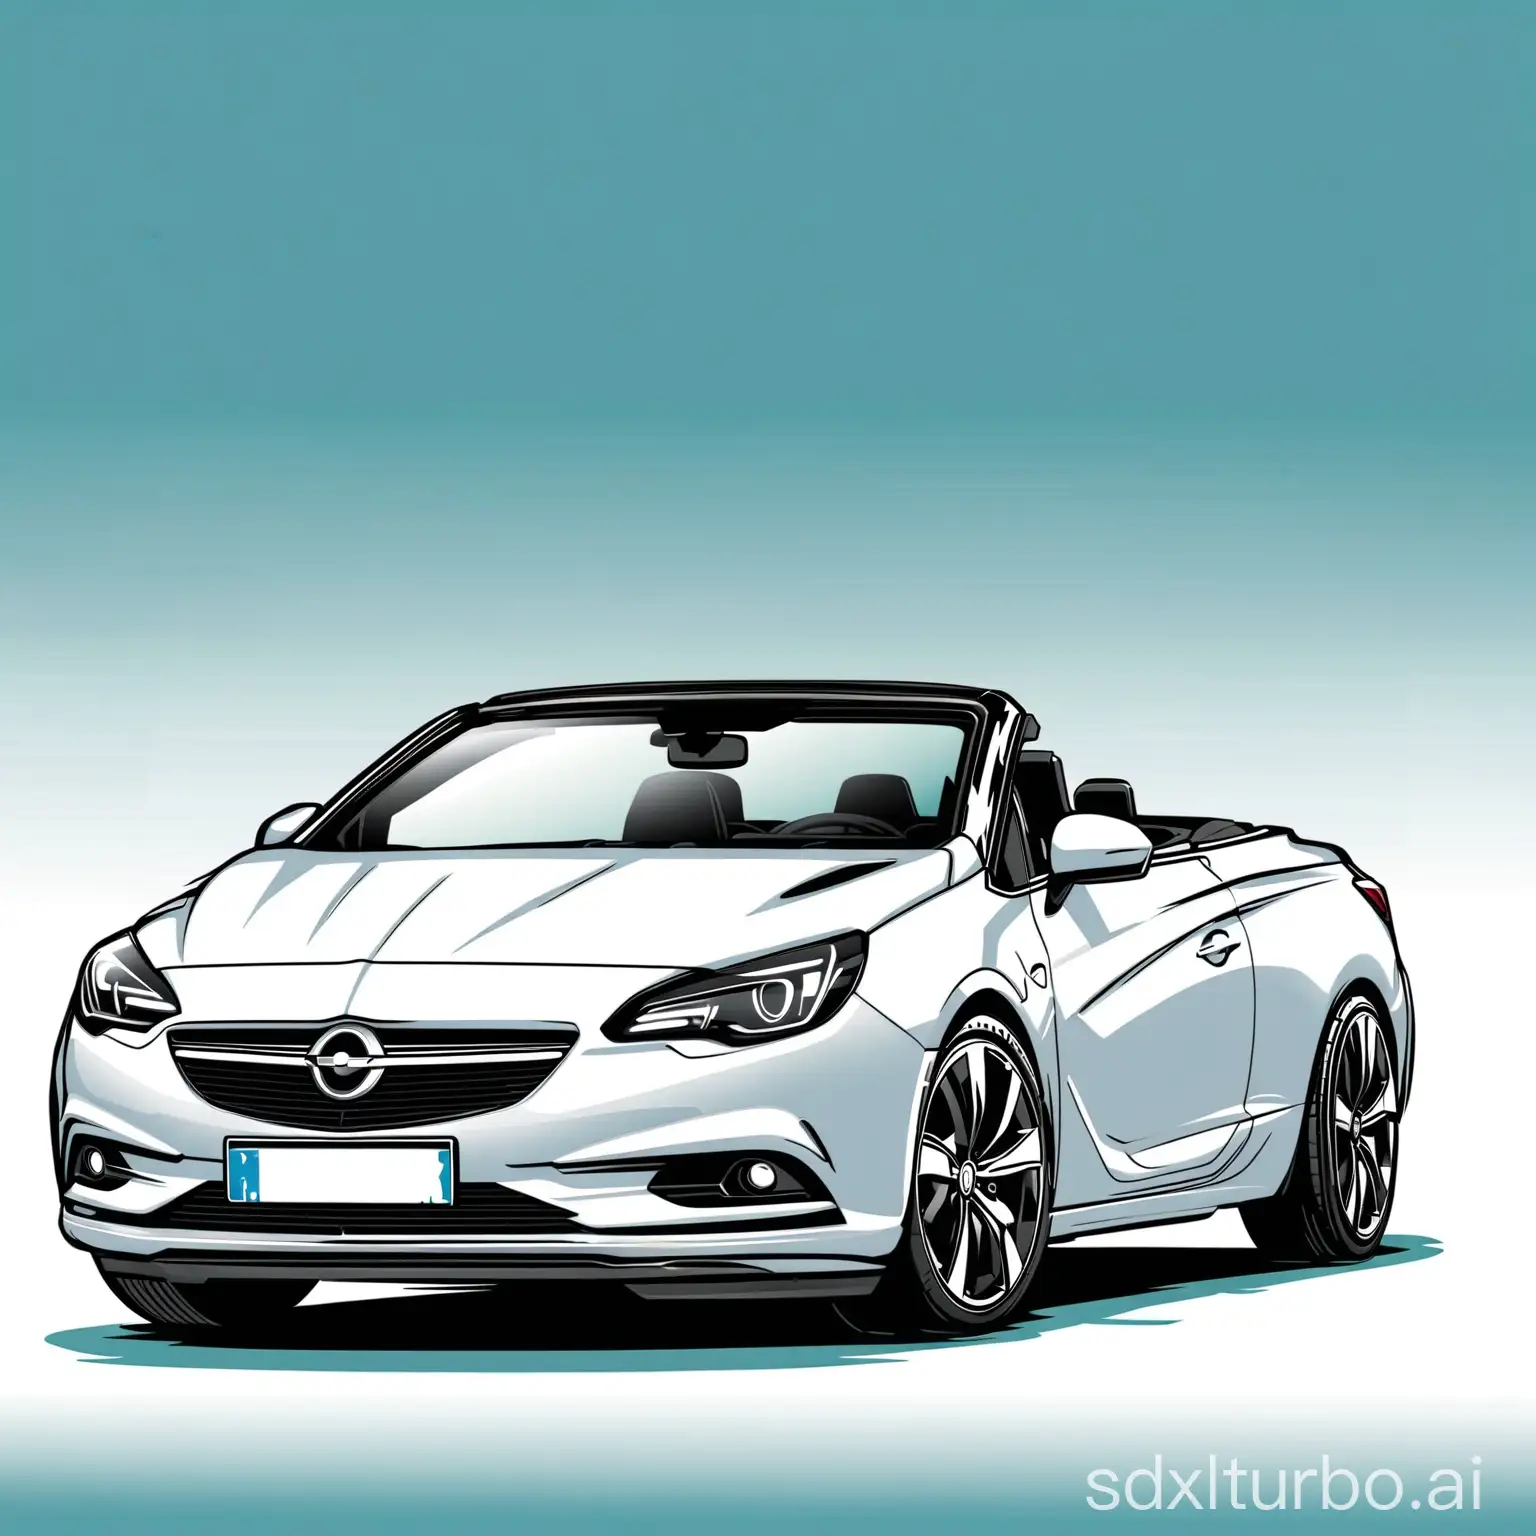 Luxurious-Opel-Cascada-Convertible-Car-in-Vibrant-Vector-Illustration